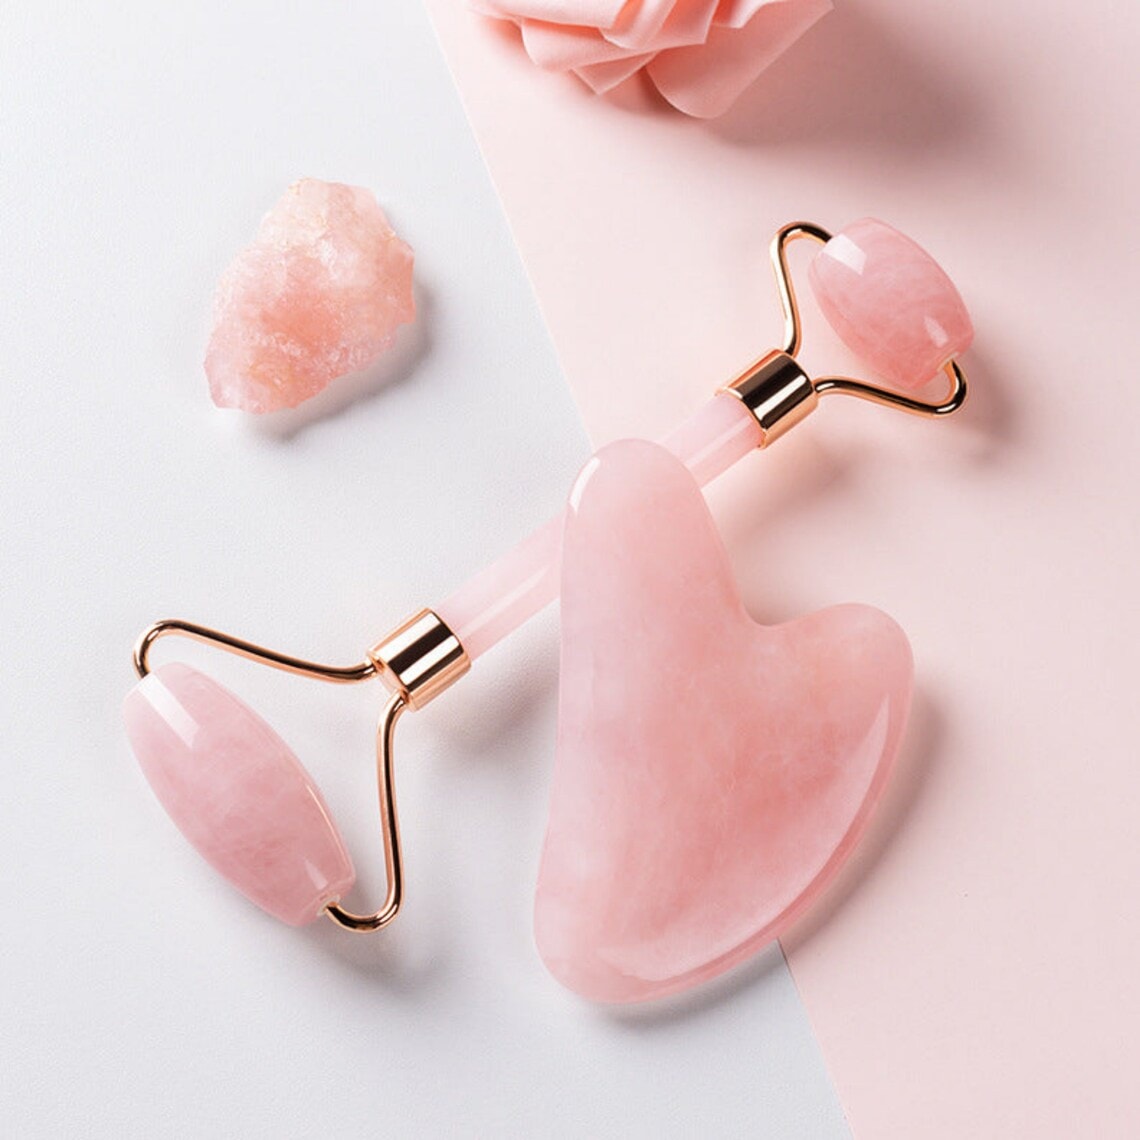 rose quartz beauty products